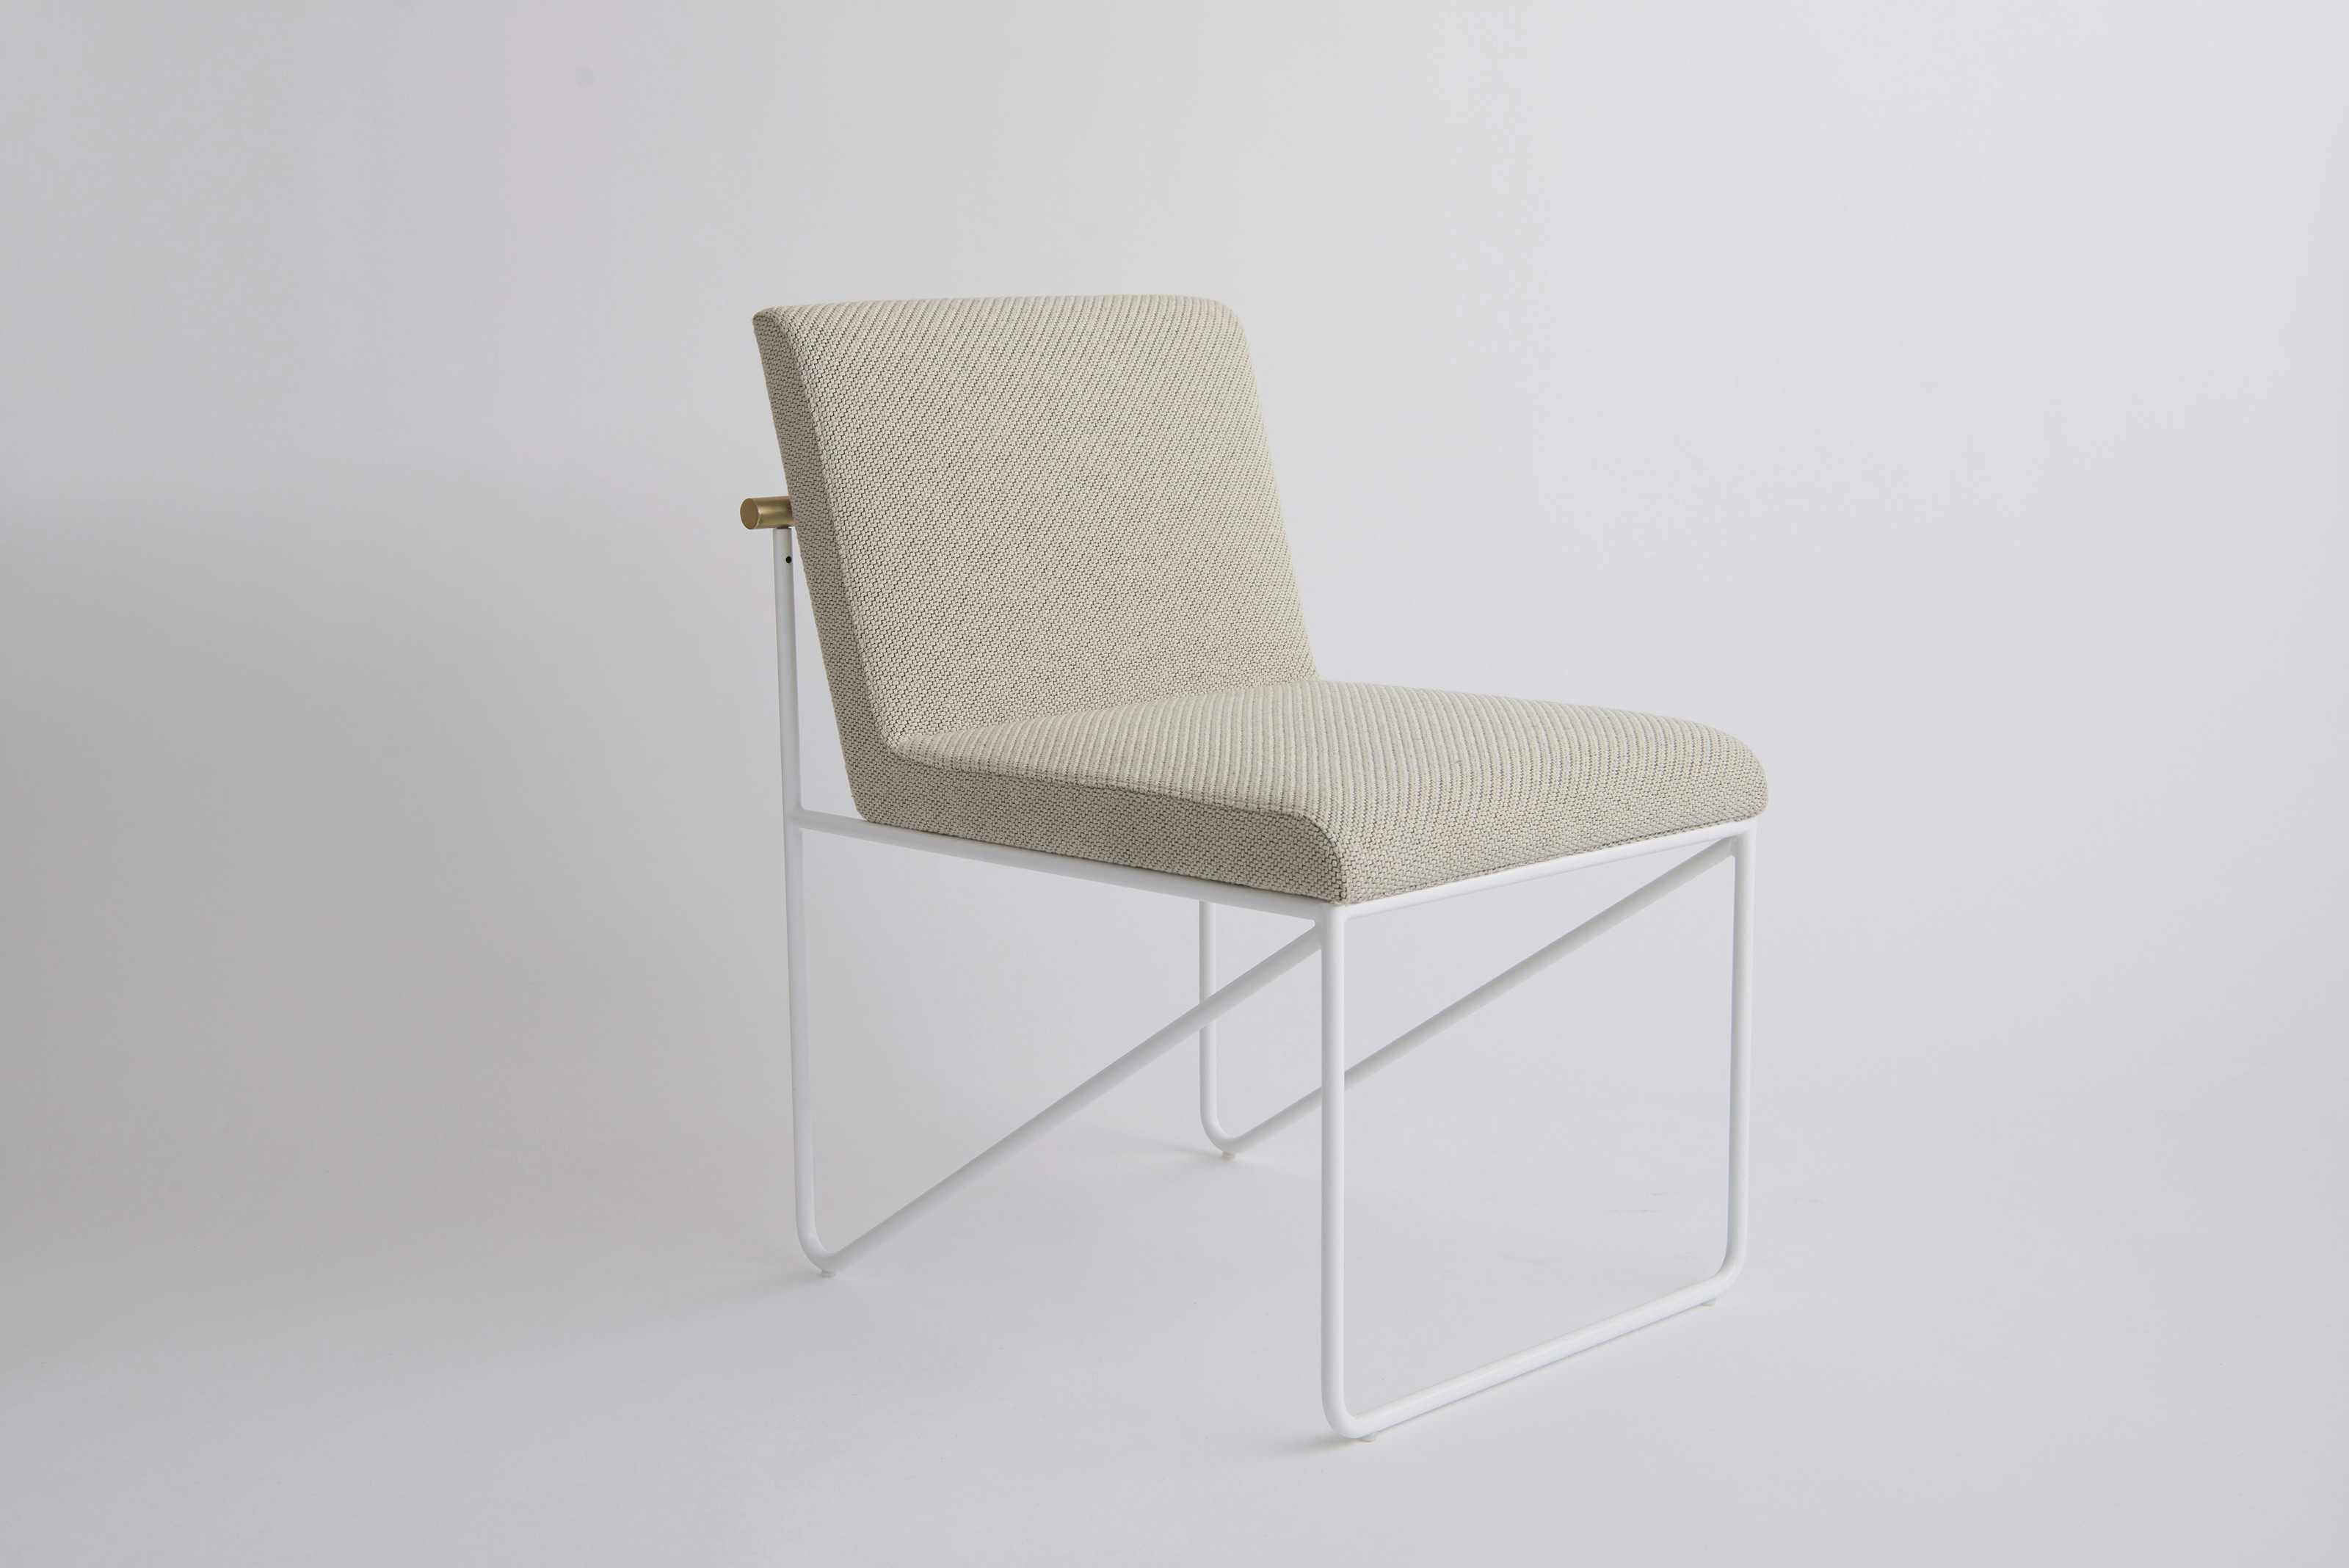 Phase Design Reza Feiz Kickstand Side Chair Armless 2 Web